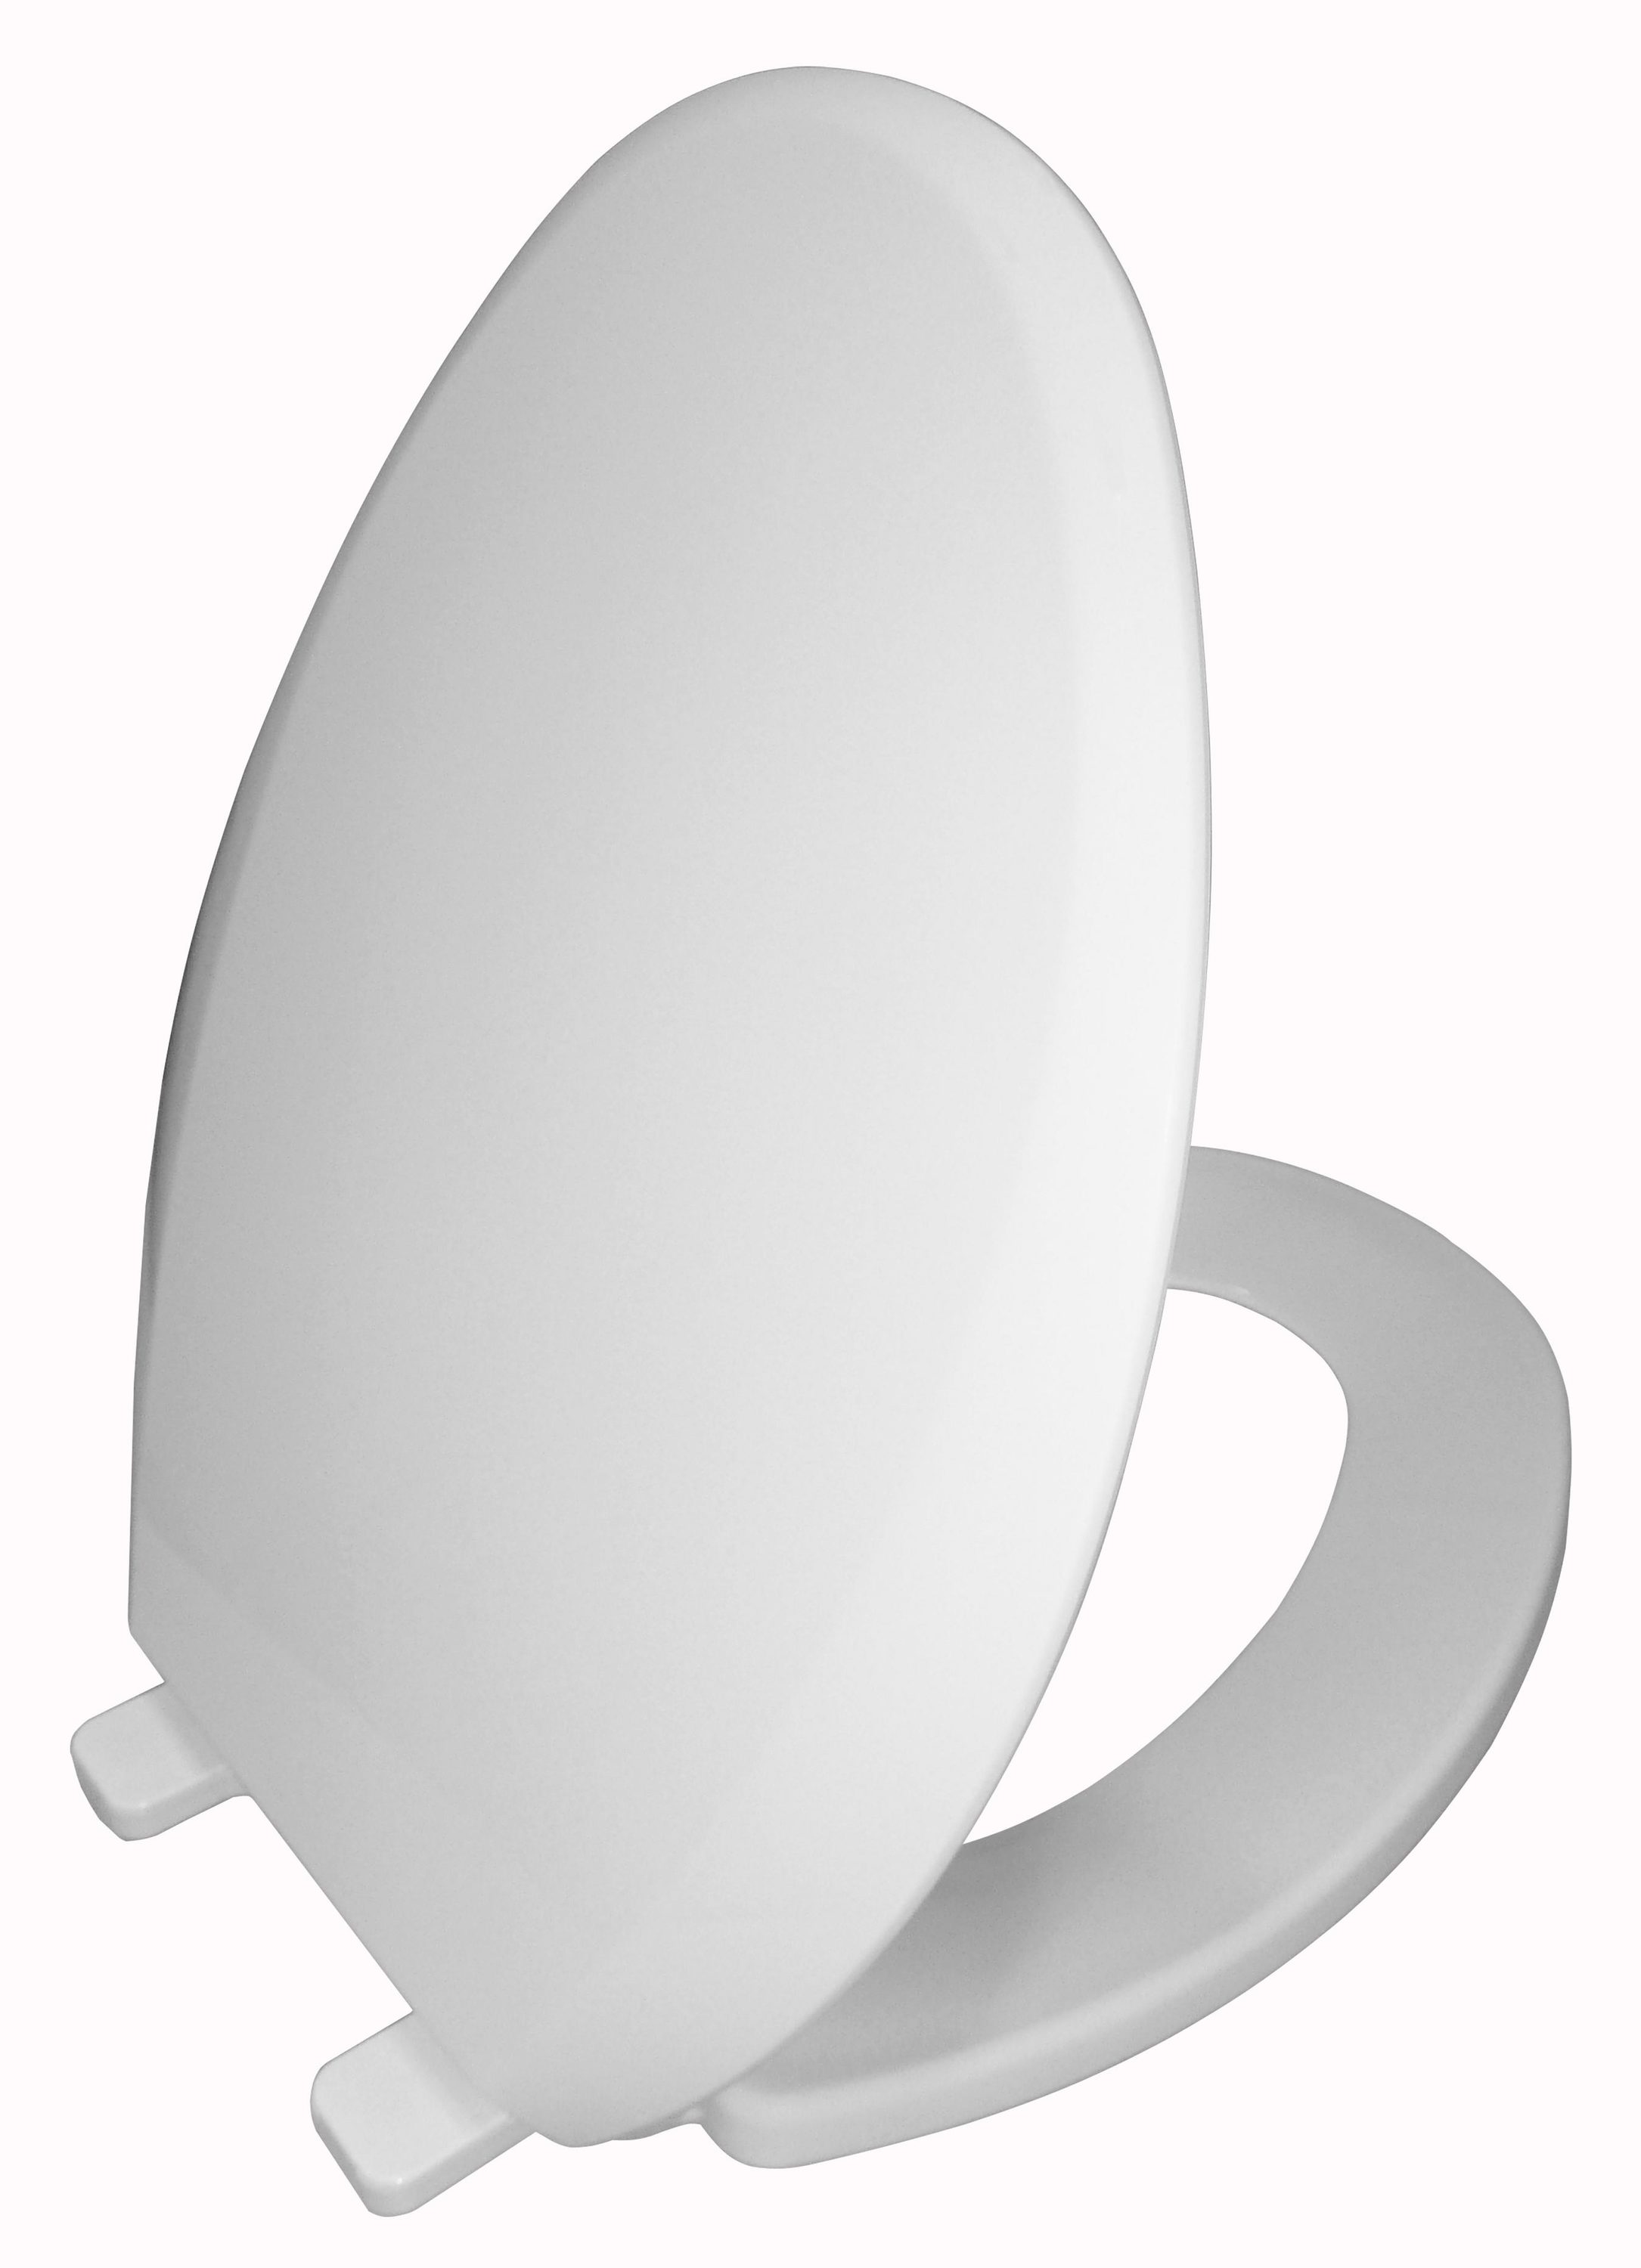 Easy to install AquaSource White Elongated Slow-Close Toilet Seat #0854811 